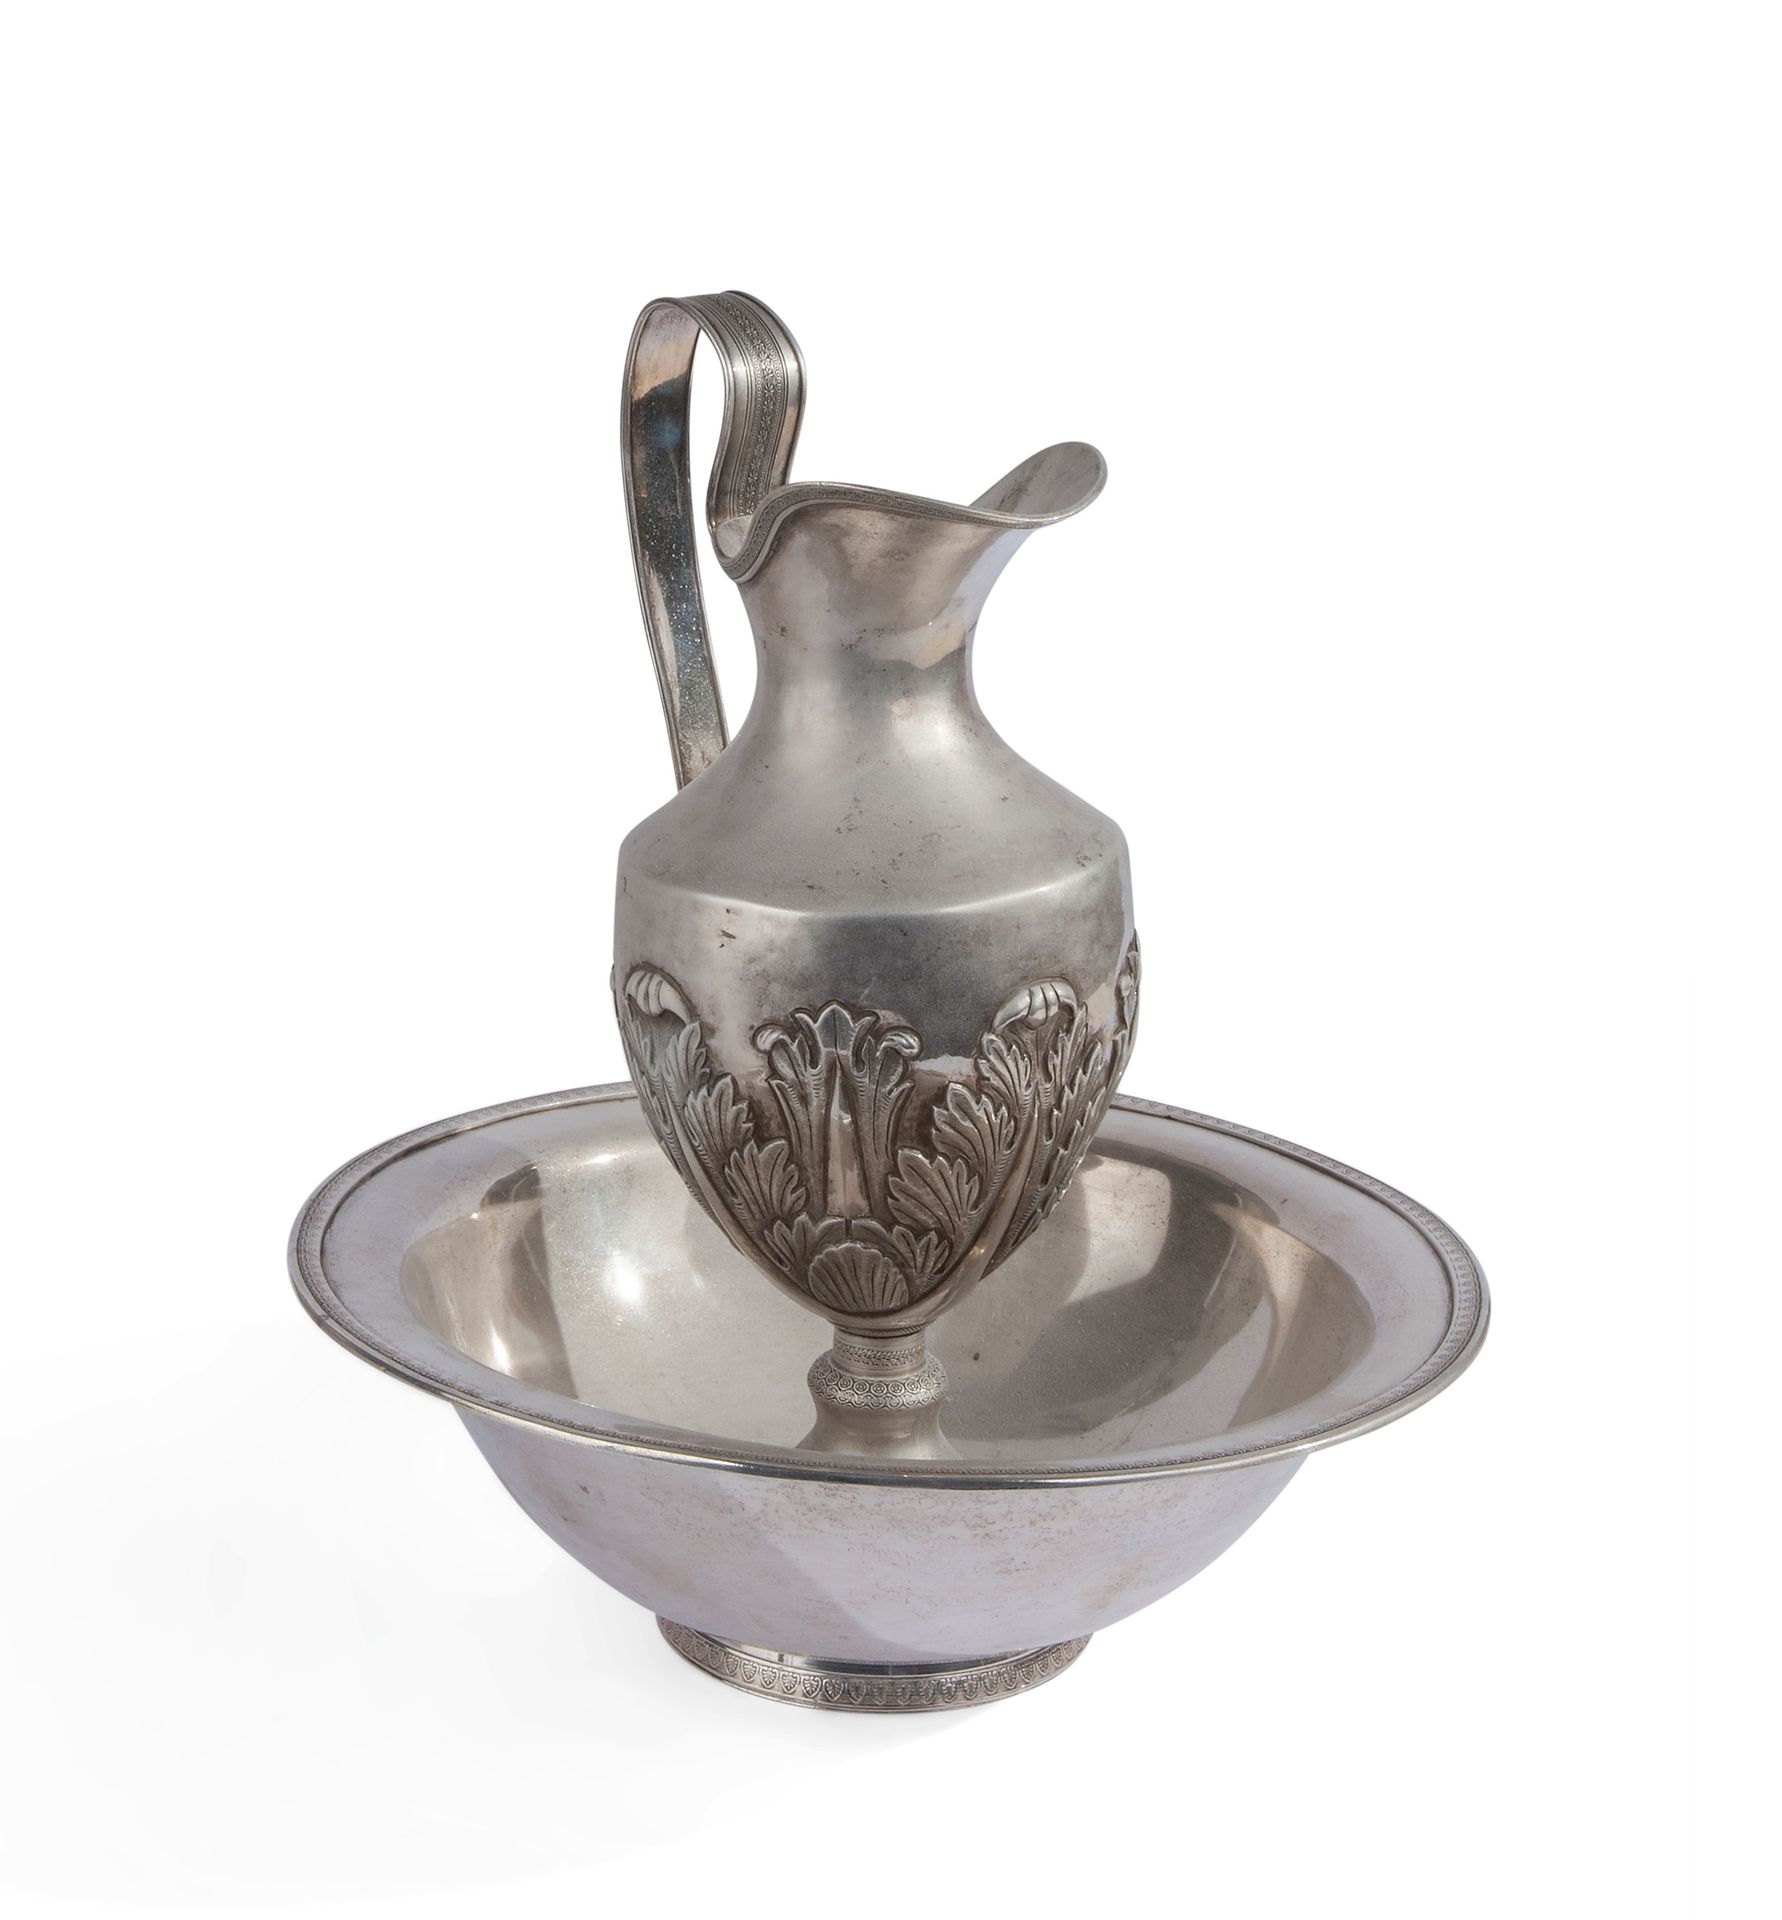 Silver jug and basin, Spain 19th century 总重量65.2盎司，14.1x12,2x12,2英寸。